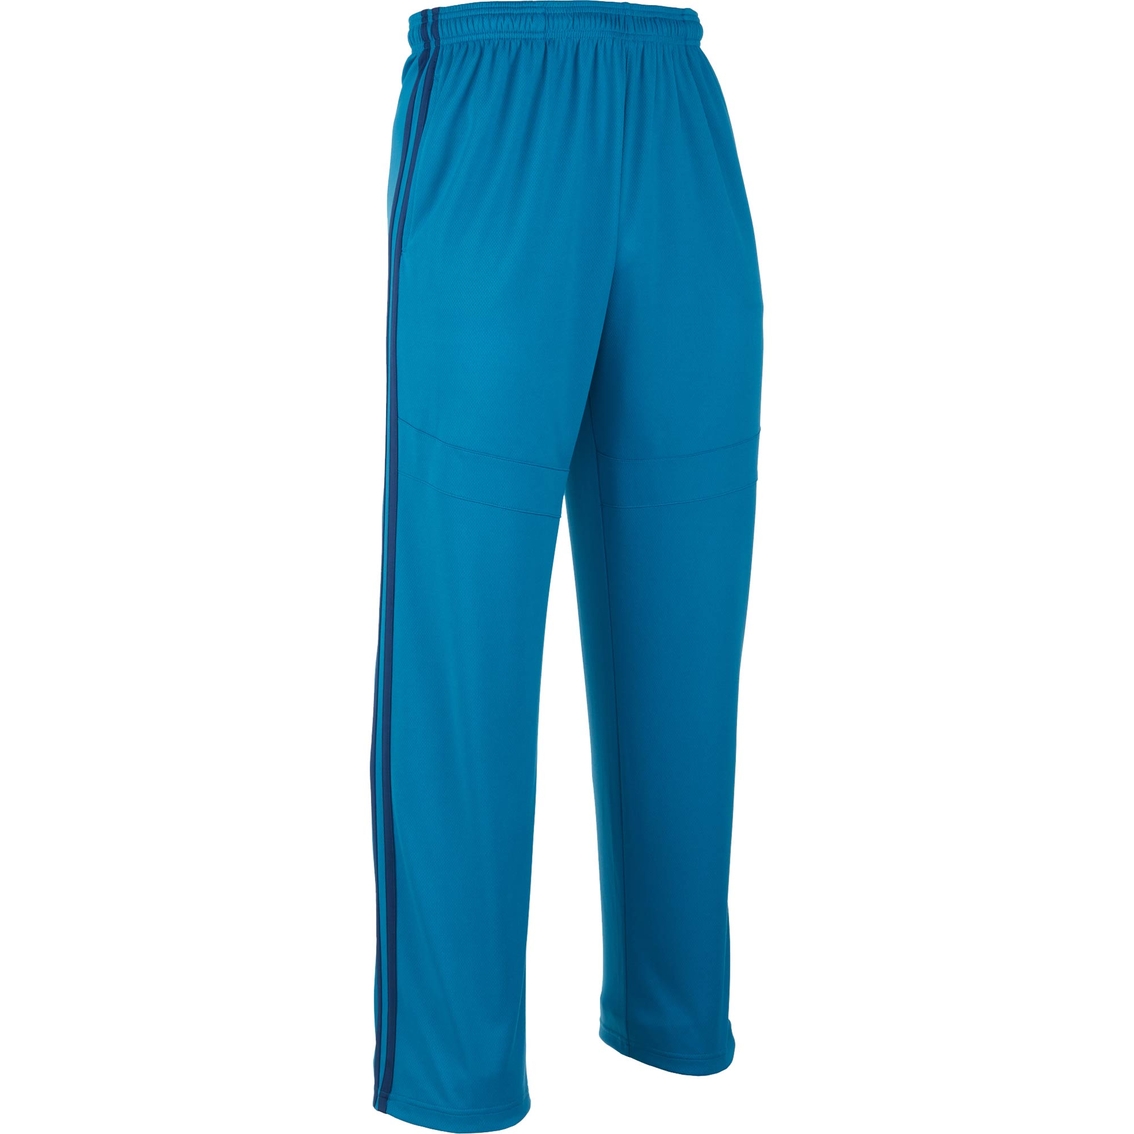 Pbx Pro Polyester Pants | Pants | Father's Day Shop | Shop The Exchange